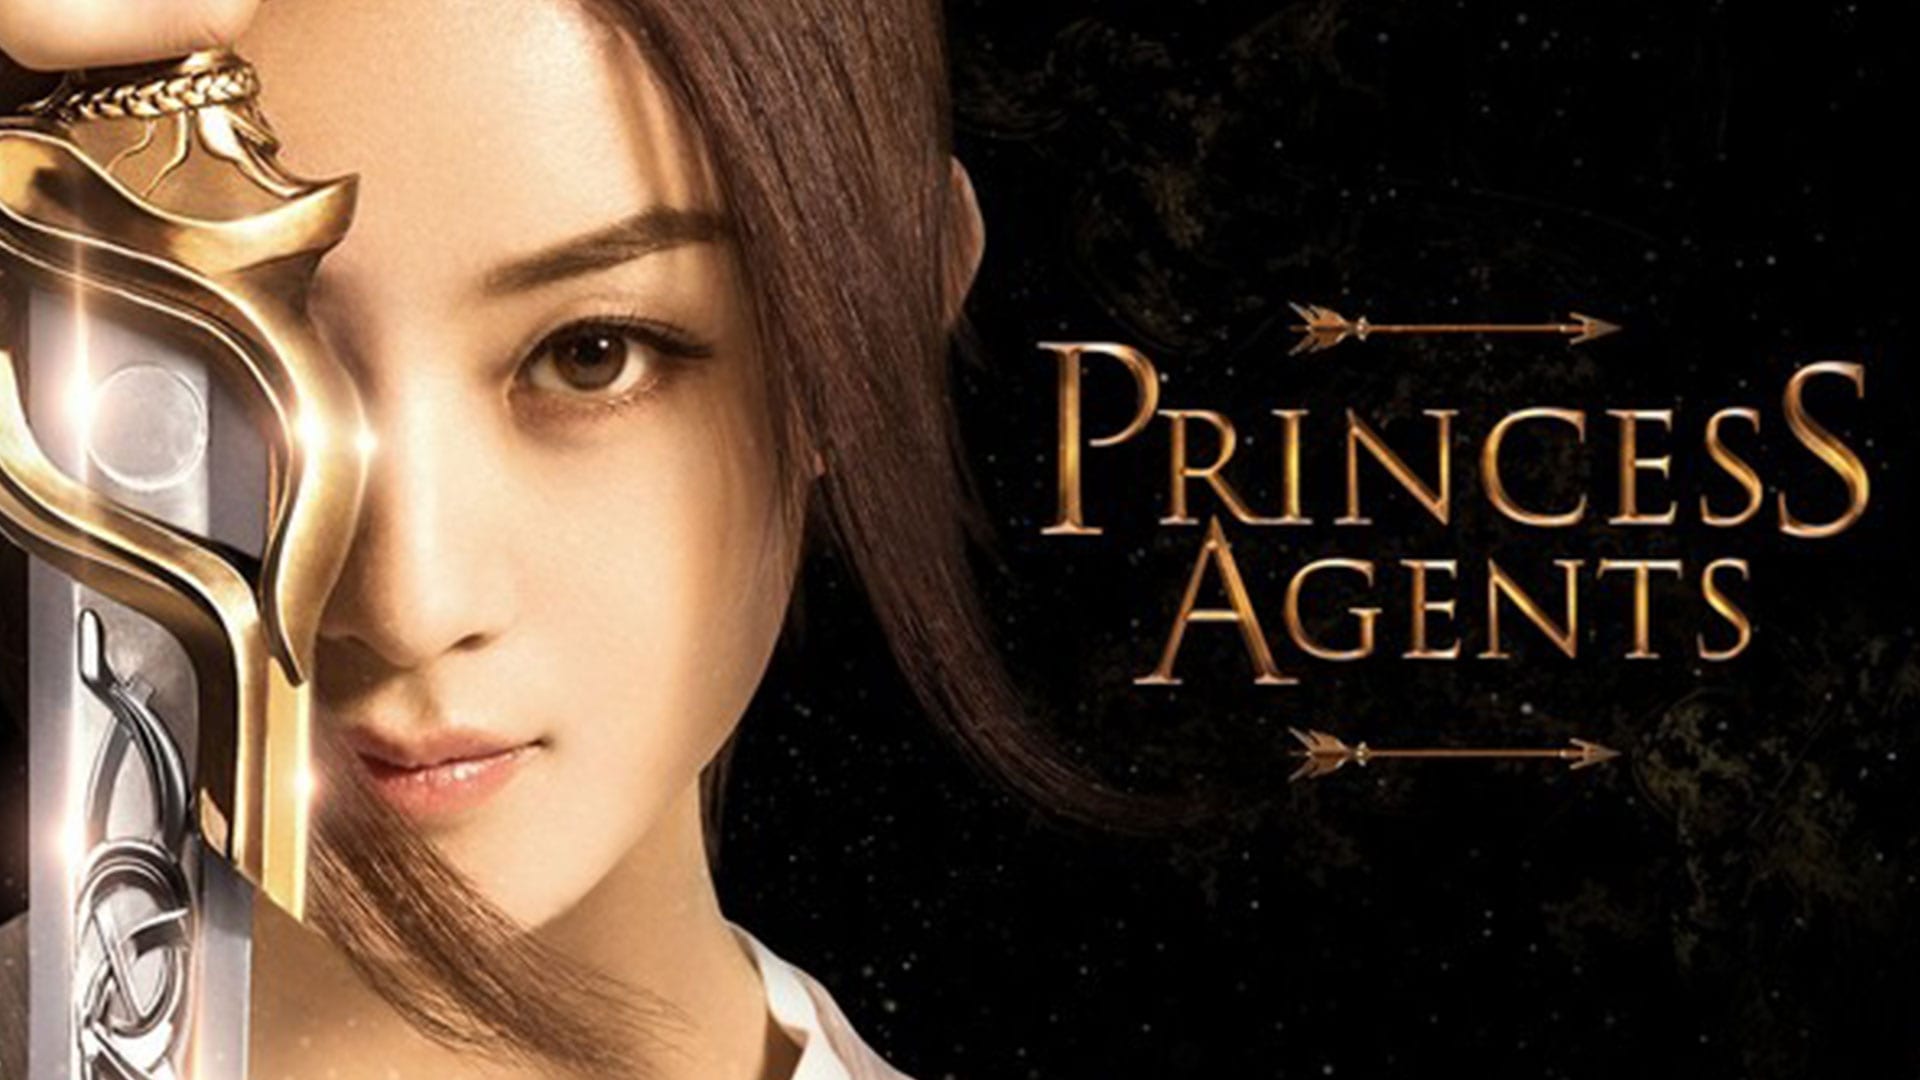 Princess agents